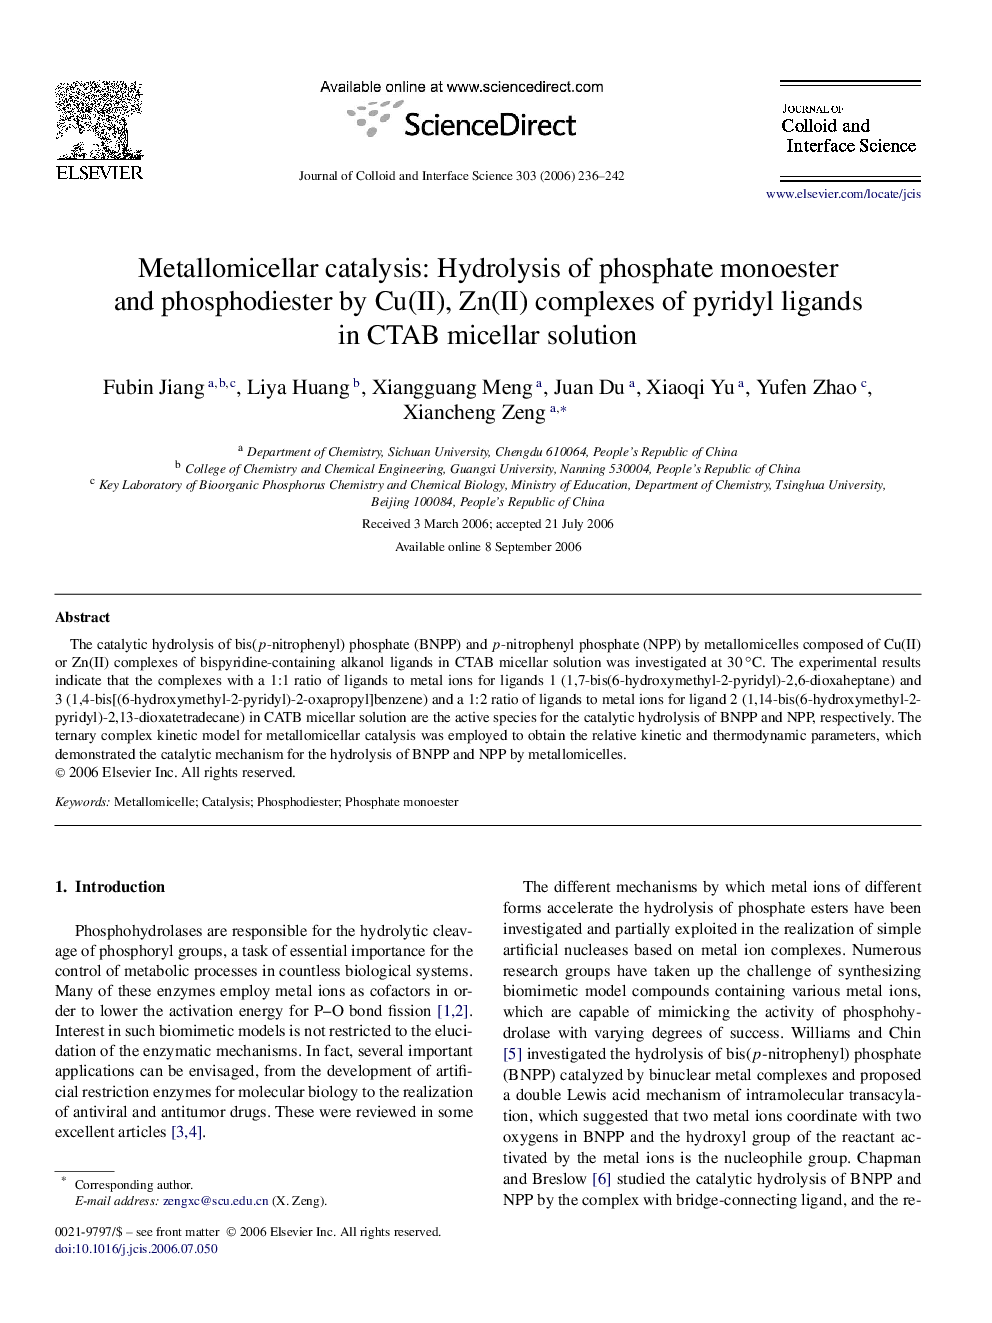 Metallomicellar catalysis: Hydrolysis of phosphate monoester and phosphodiester by Cu(II), Zn(II) complexes of pyridyl ligands in CTAB micellar solution